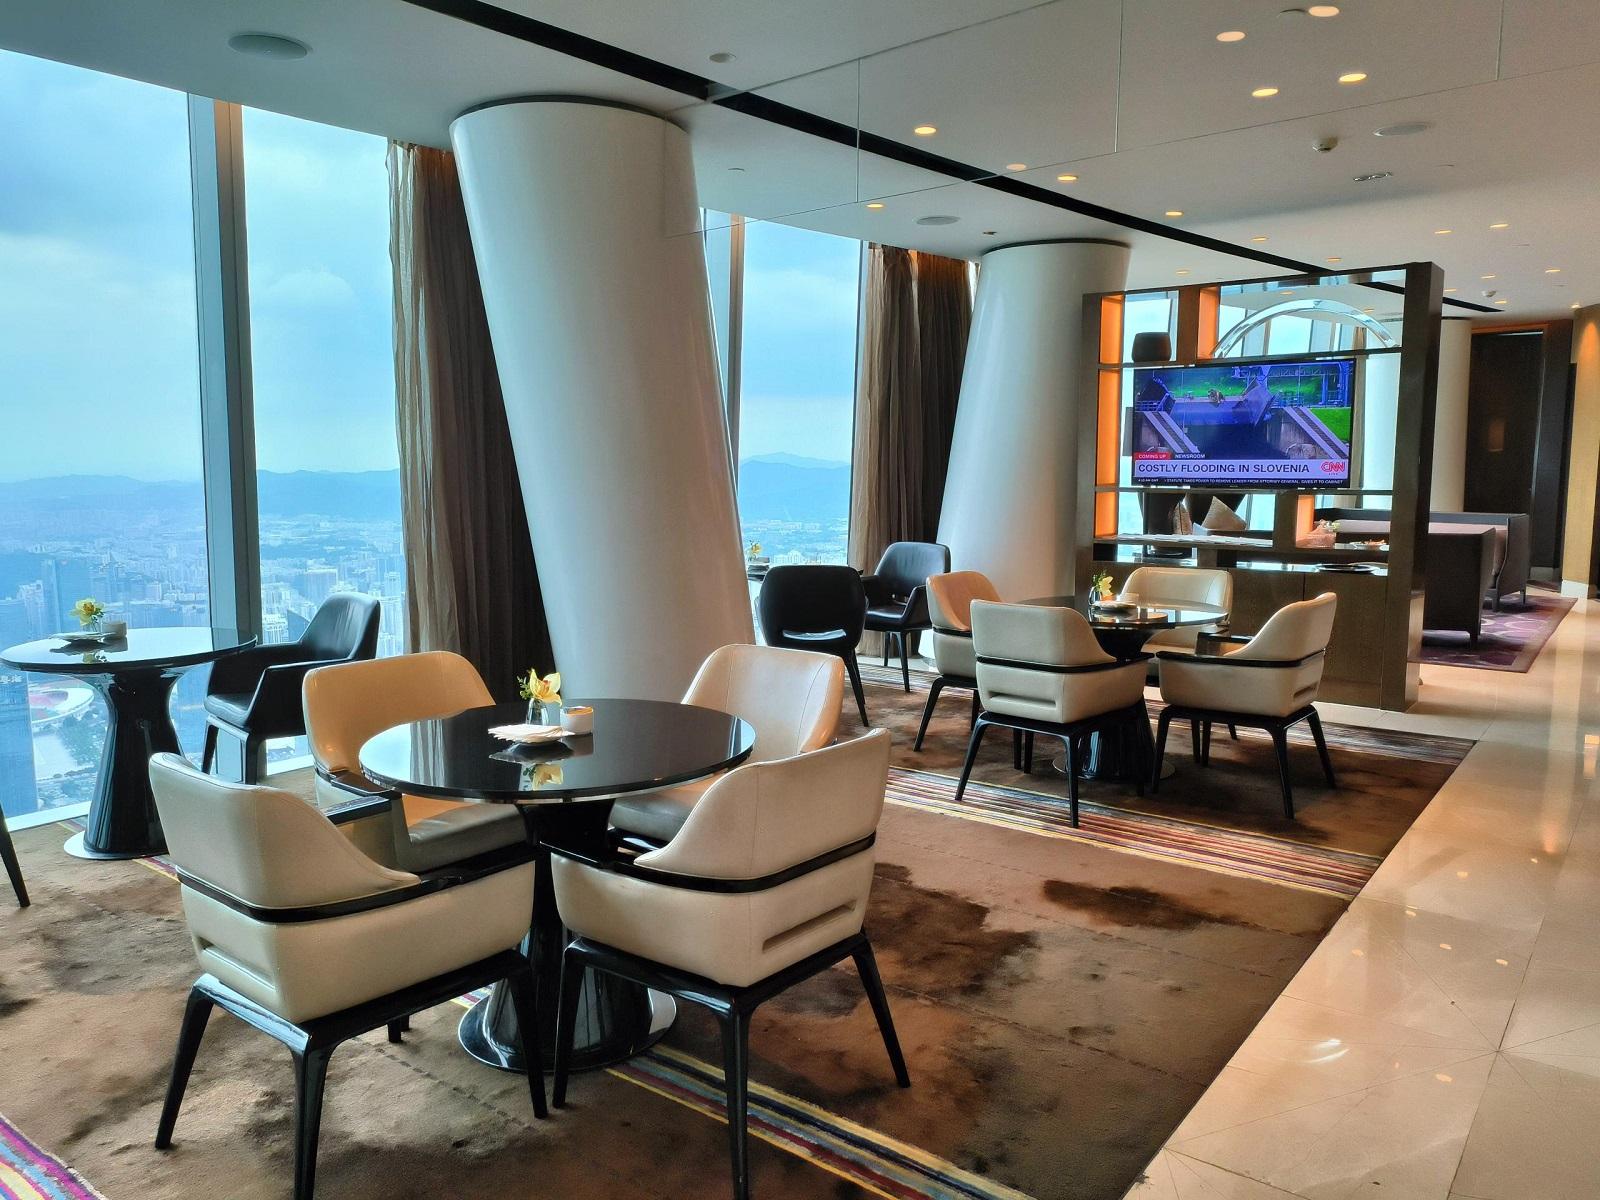 Four Seasons Hotel Guangzhou Executive Club Lounge Overview